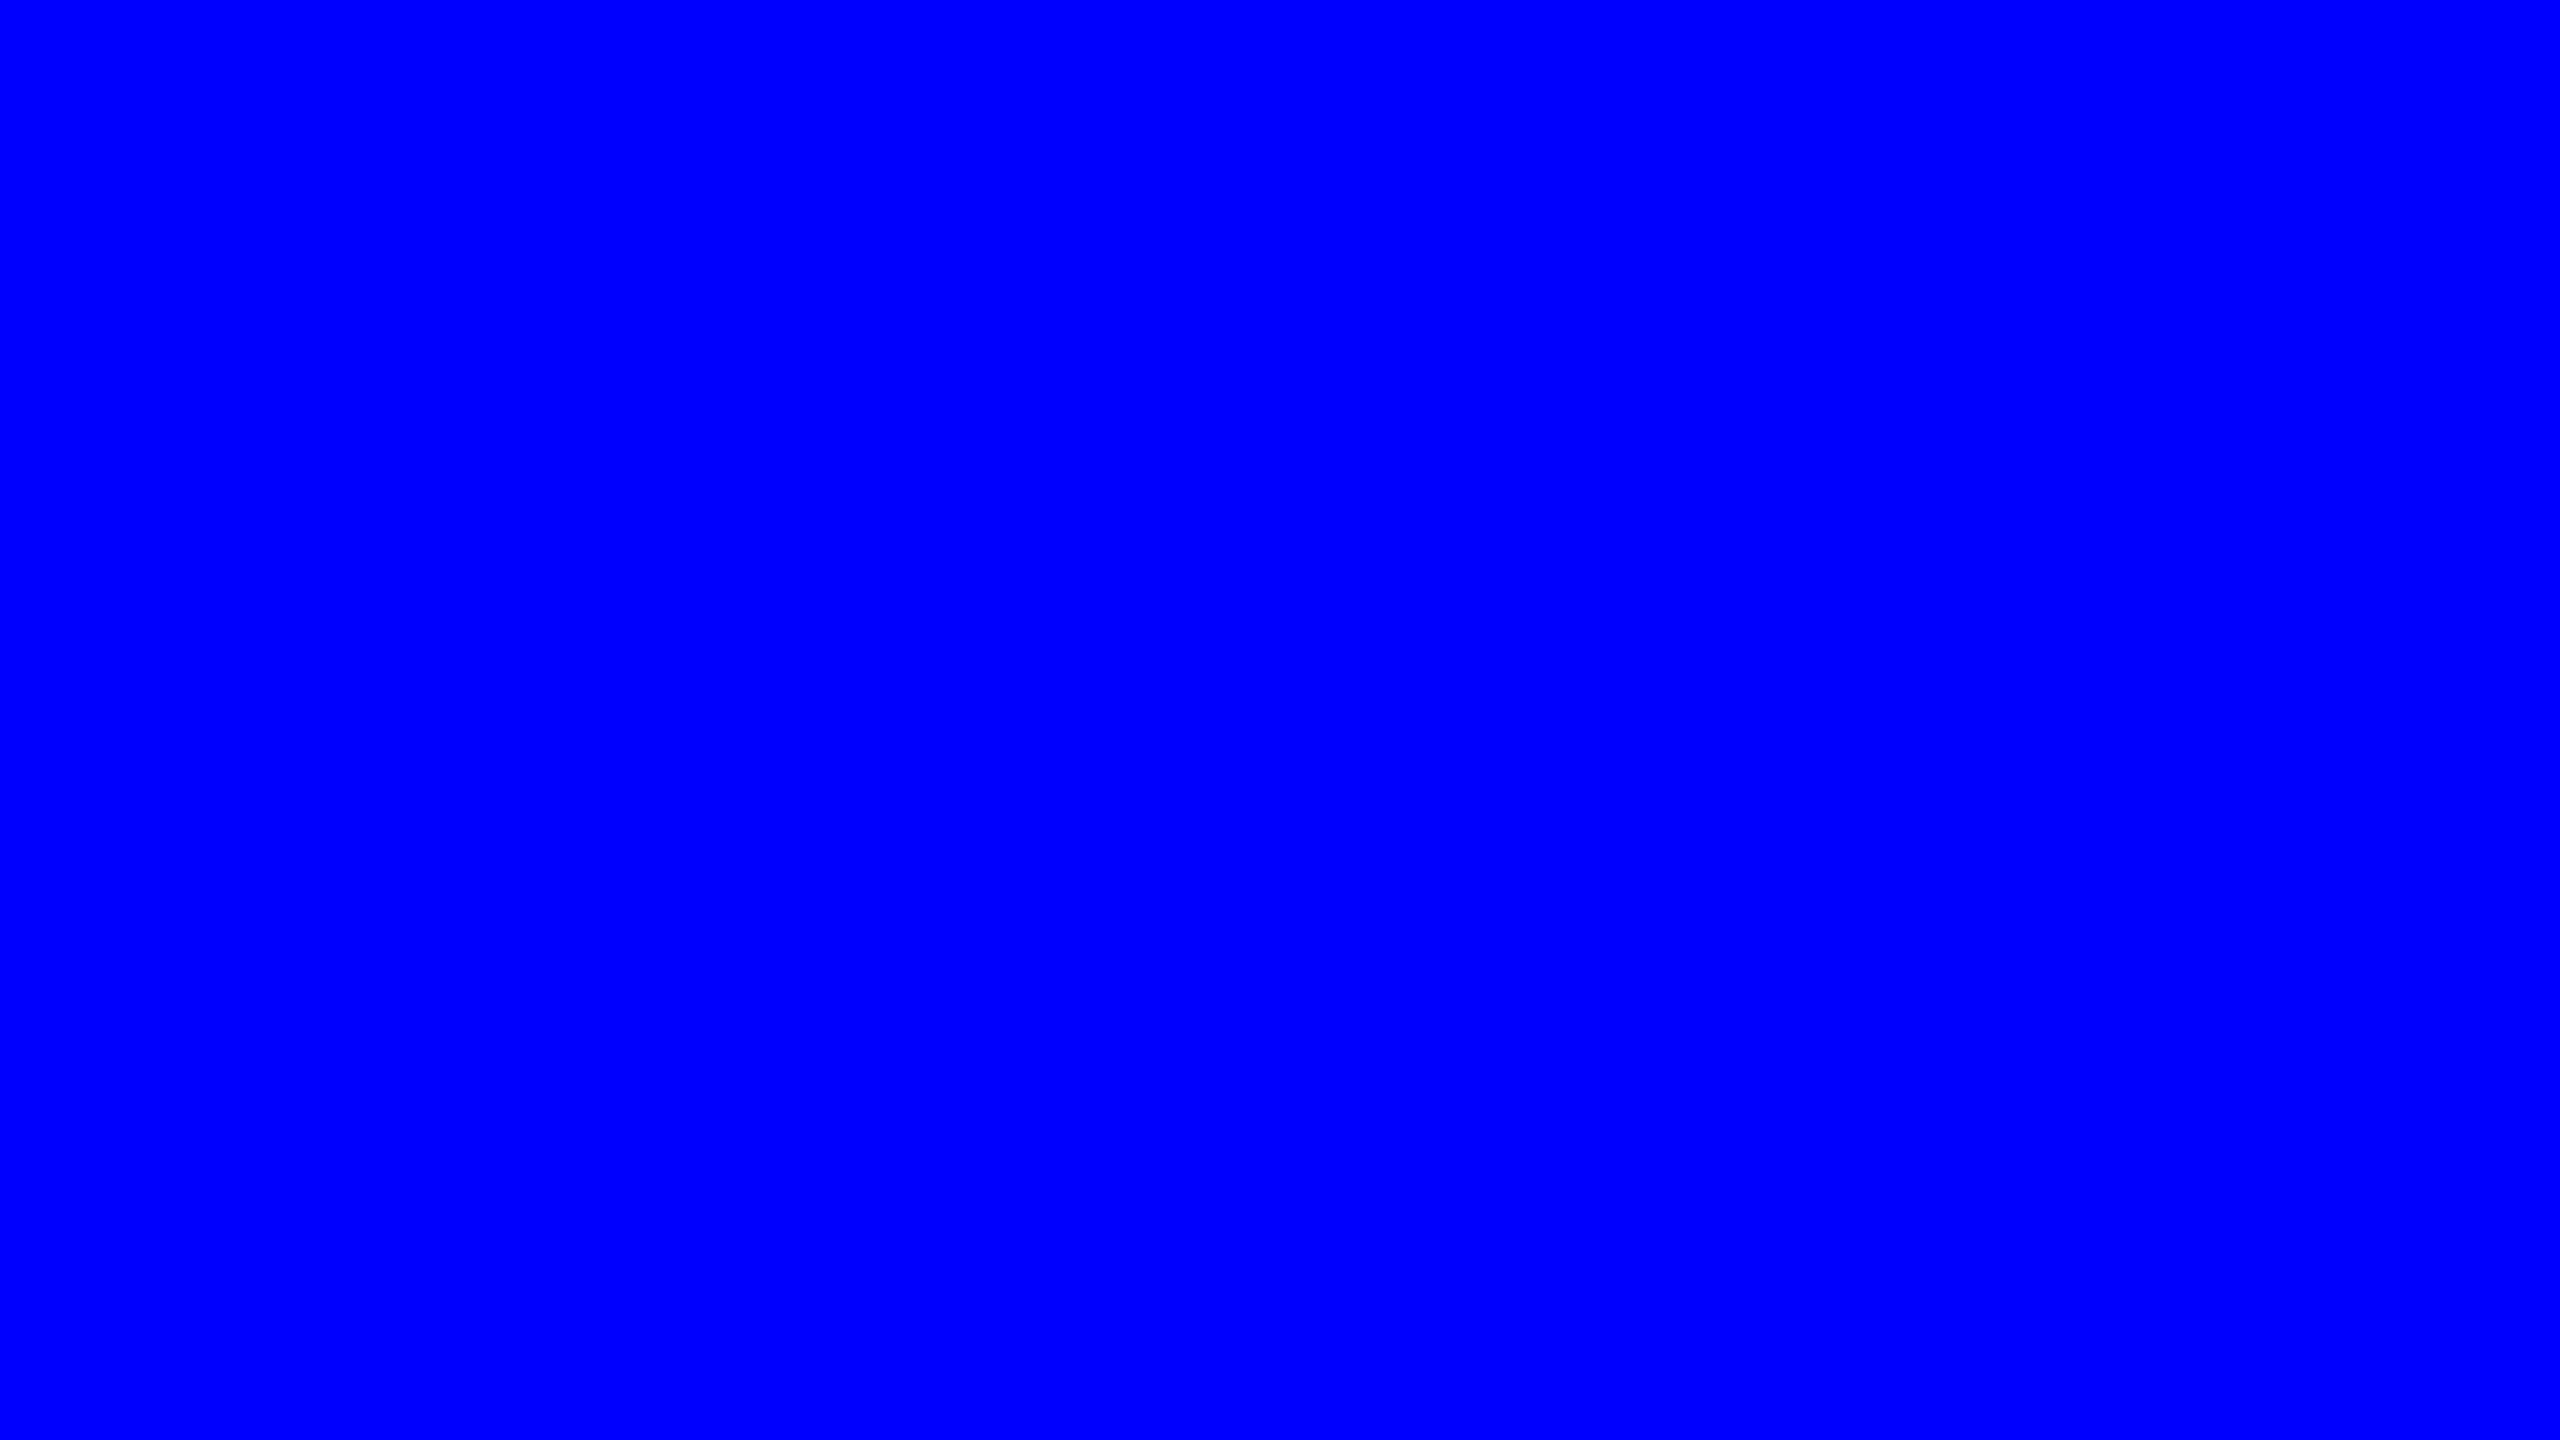 2560x1440-blue-solid-color-background.jpg